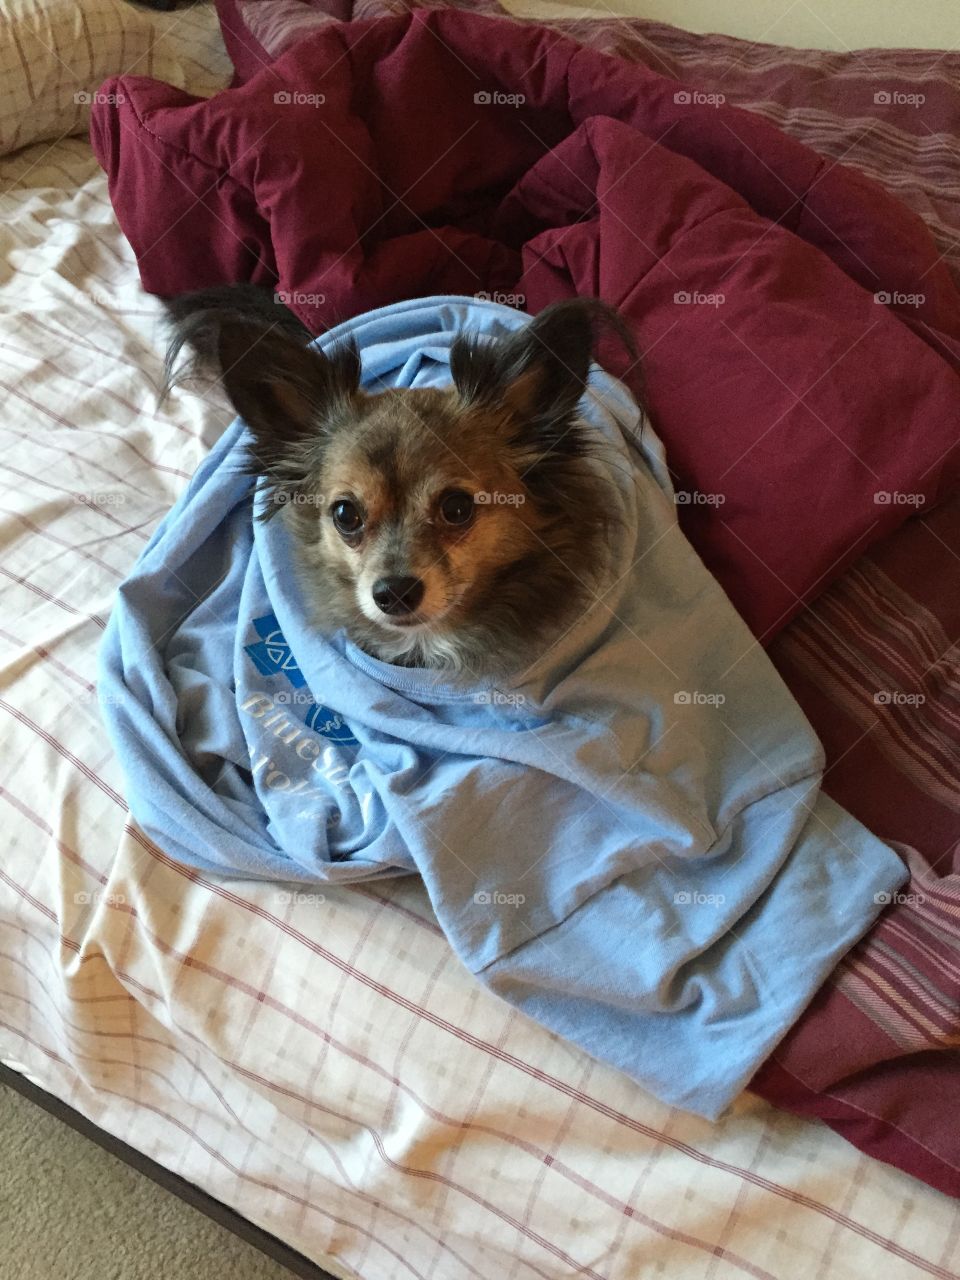 Chihuahua in a blanket. My Chihuahua snuggled inside my t-shirt.